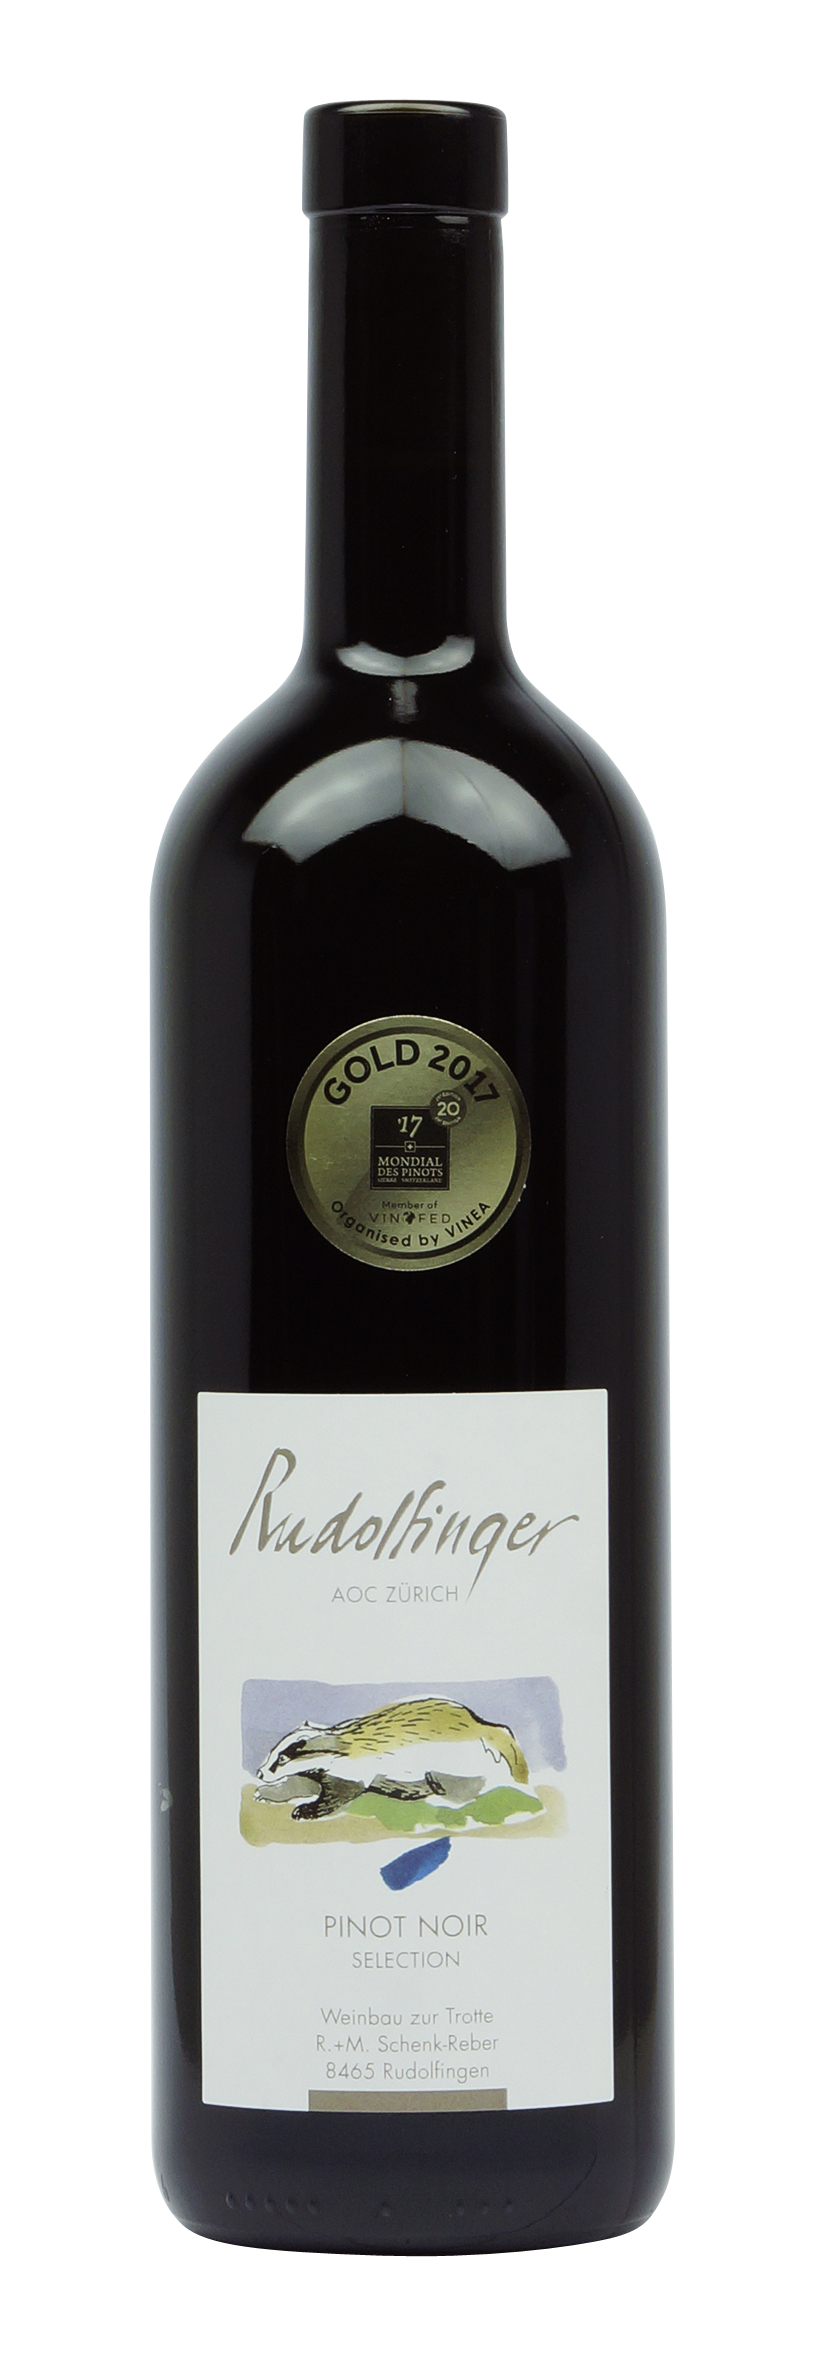 Zürich AOC Rudolfinger Pinot Noir Sélection 2015